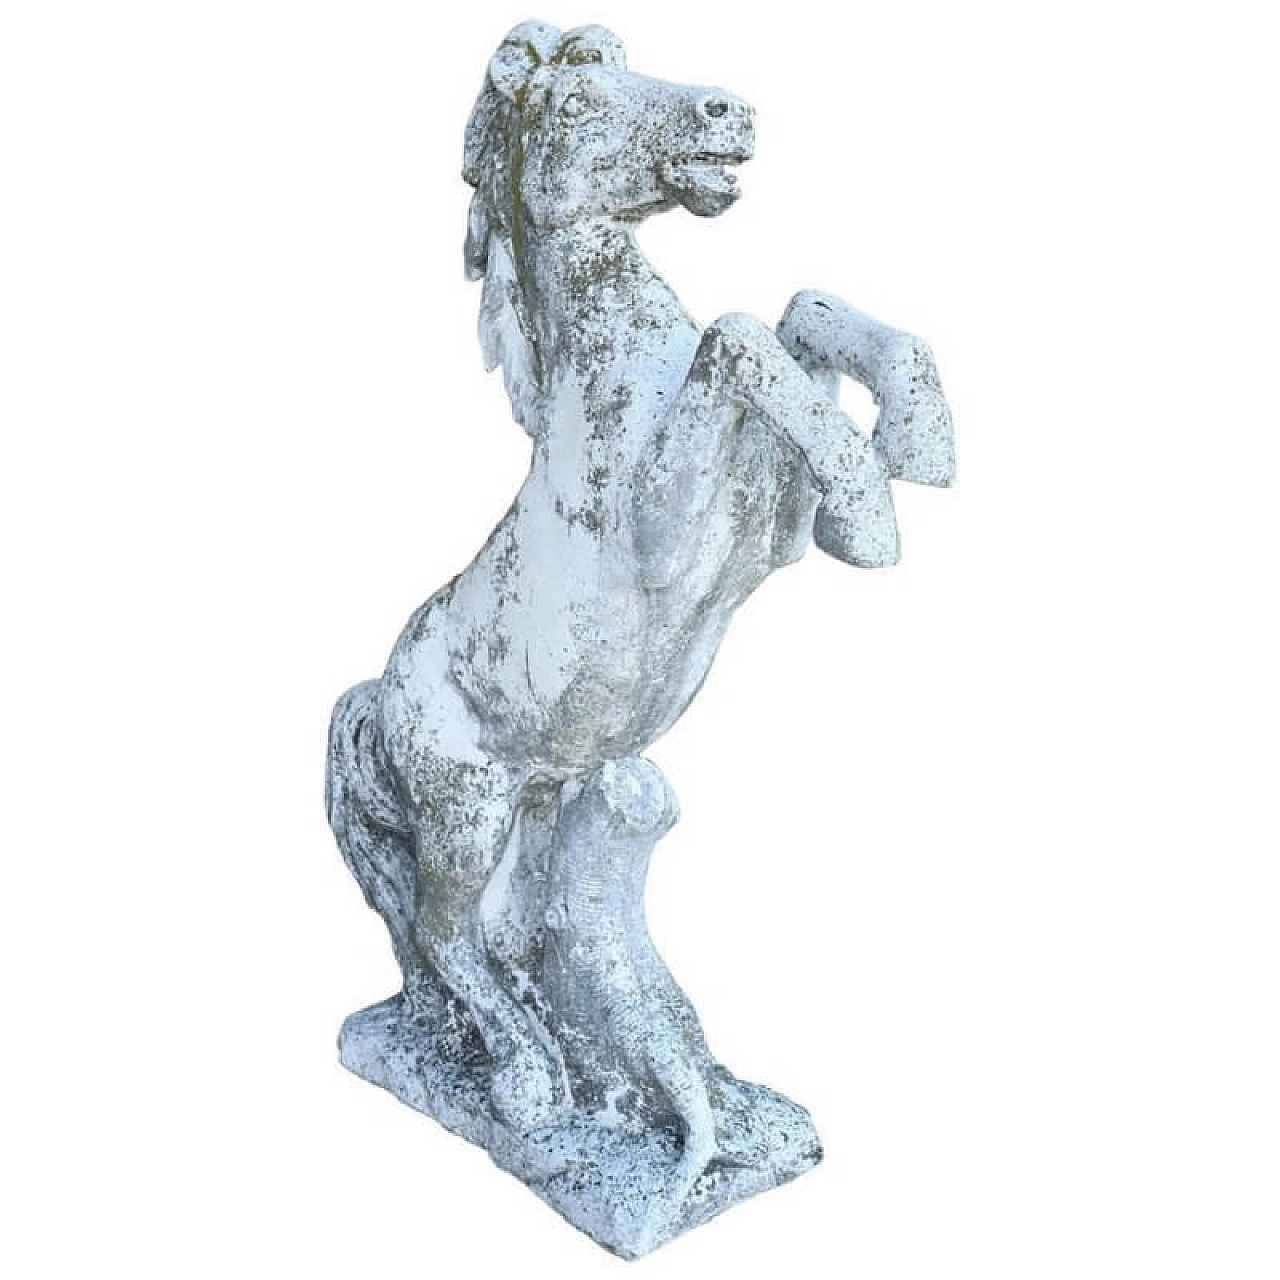 Big garden horse statue in grit, first 900s 1279250